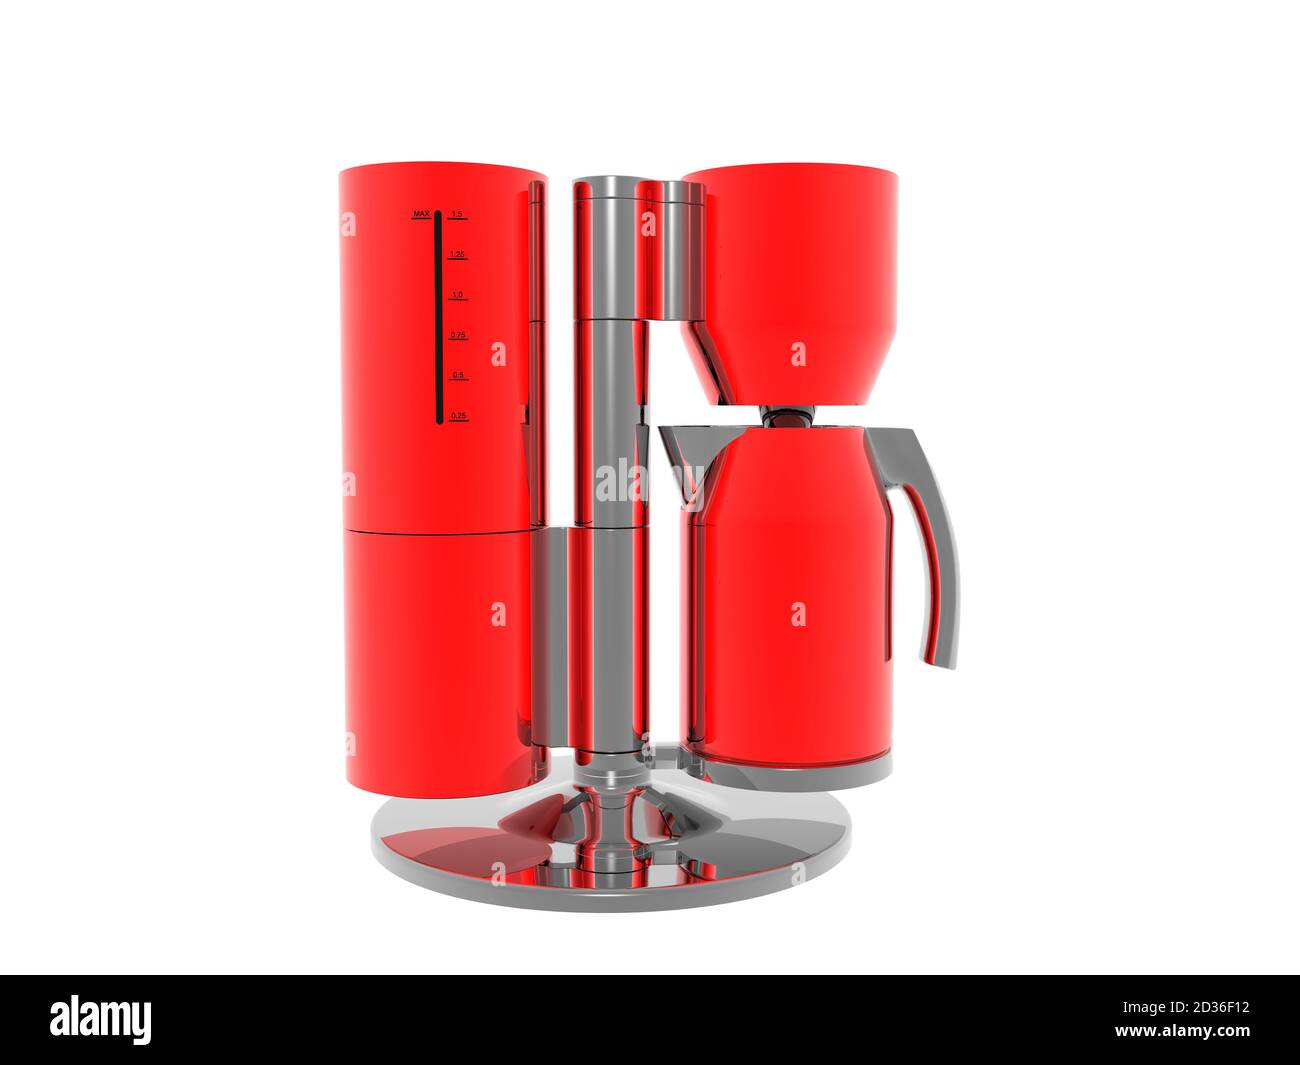 Rote Kaffeemaschine mit Thermoskanne Stockfotografie - Alamy